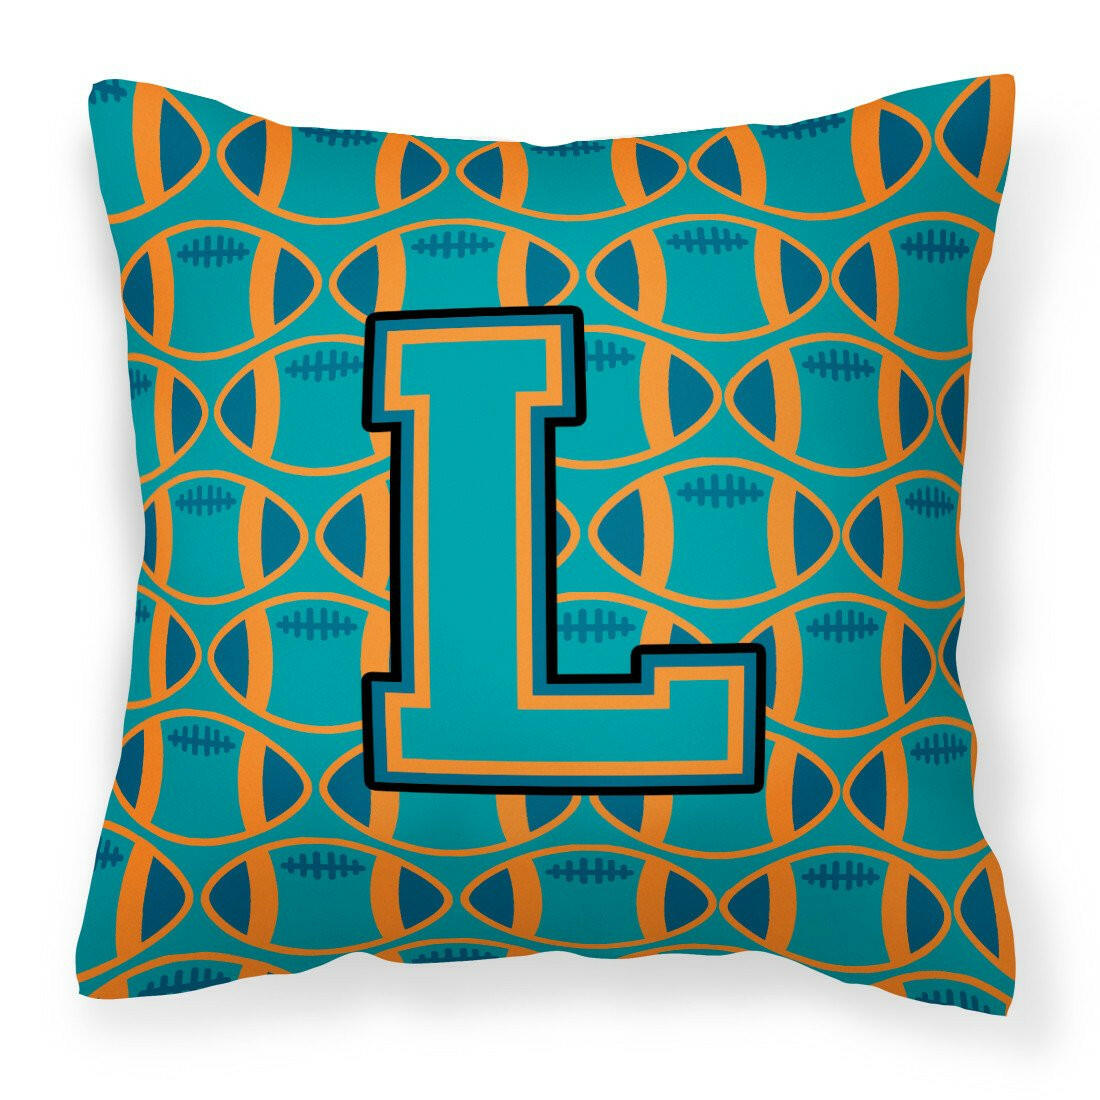 Letter L Football Aqua, Orange and Marine Blue Fabric Decorative Pillow CJ1063-LPW1414 by Caroline's Treasures